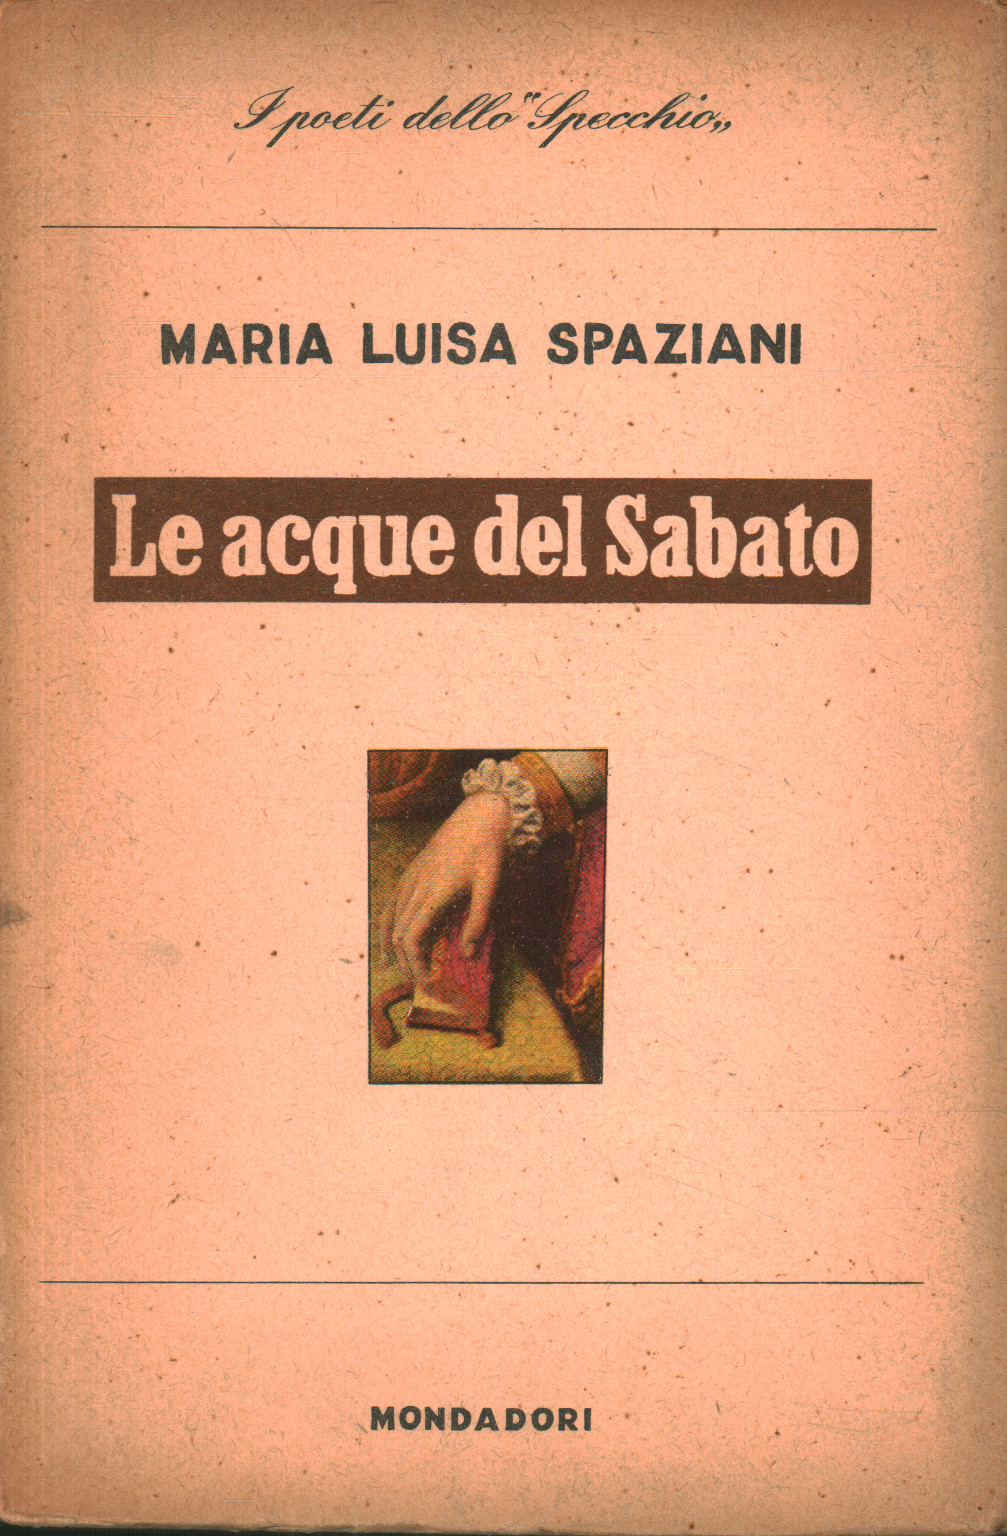 Le acque del sabato, Maria Luisa Spaziani